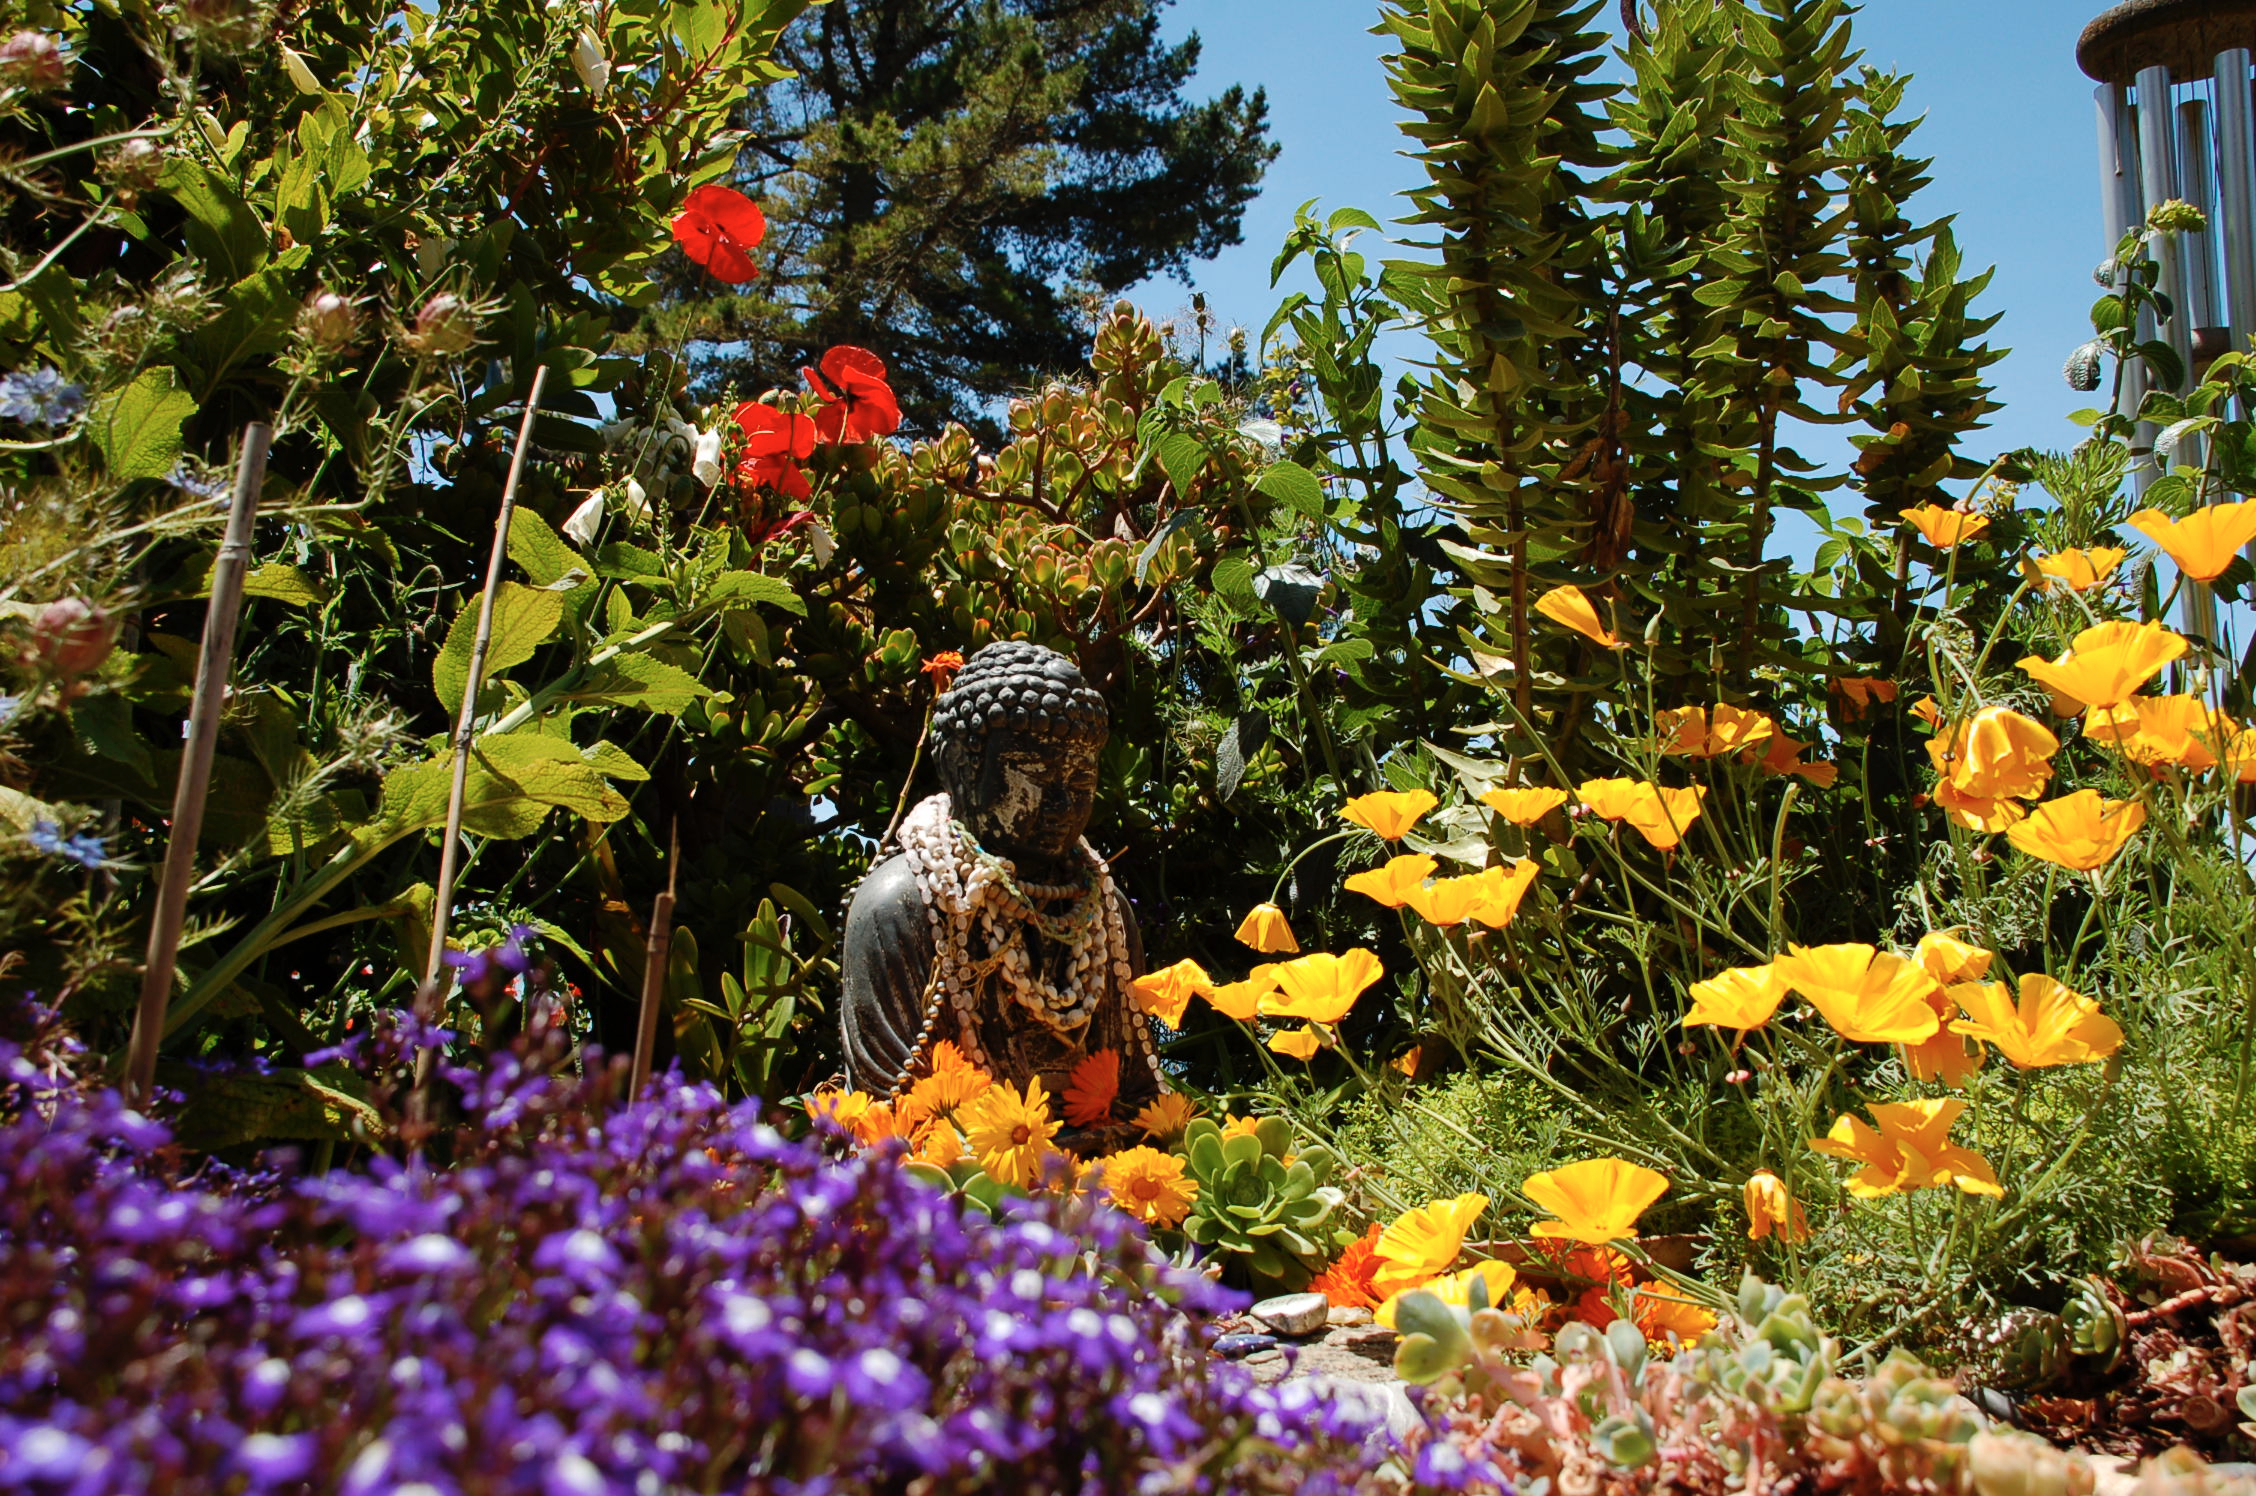 A garden at Esalen Retreat Center. Photo by Brad Coy, via Flickr Creative Commons